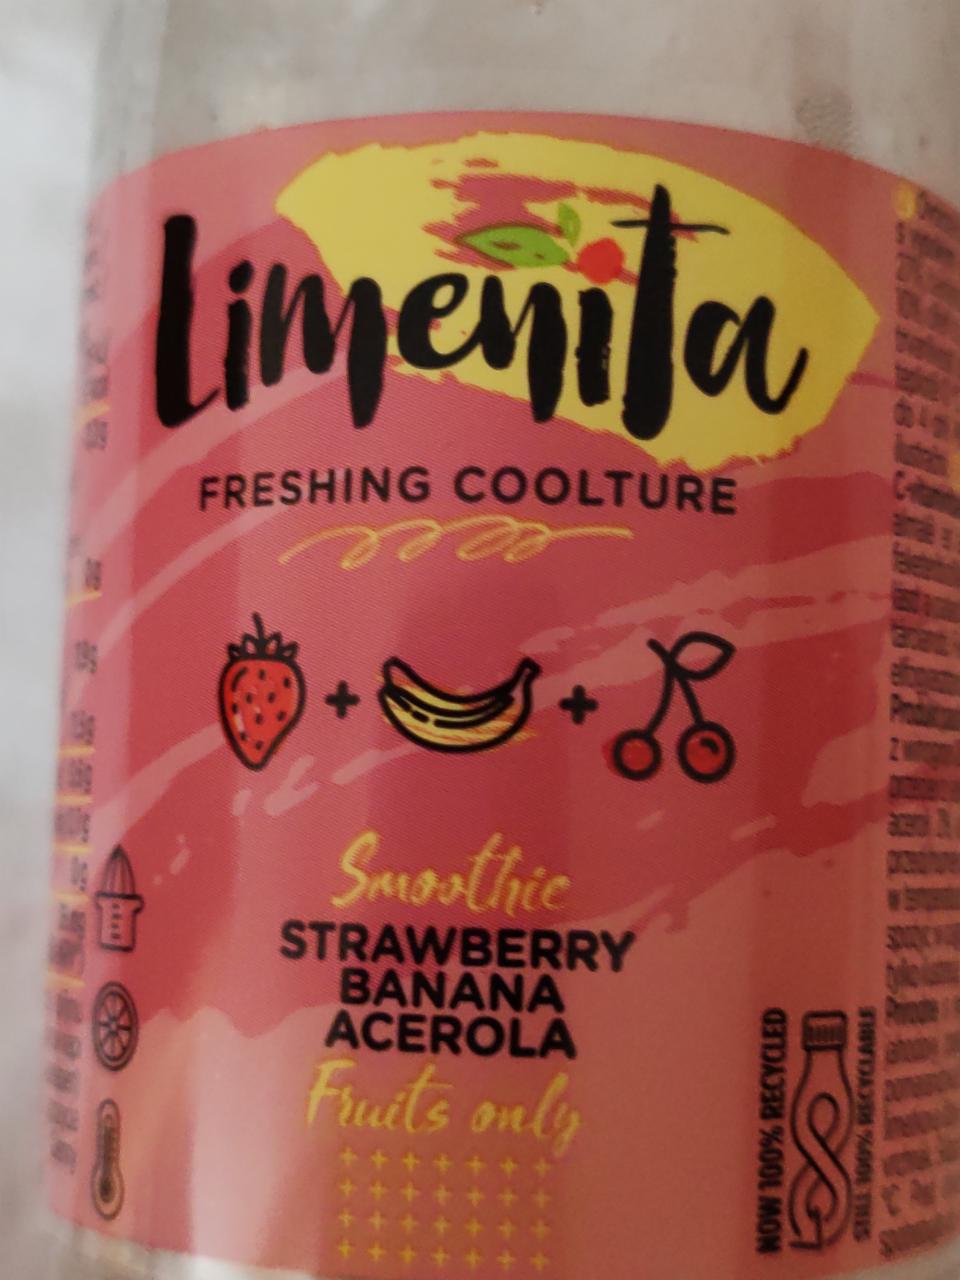 Fotografie - Limenita smoothie Strawberry banana acerola